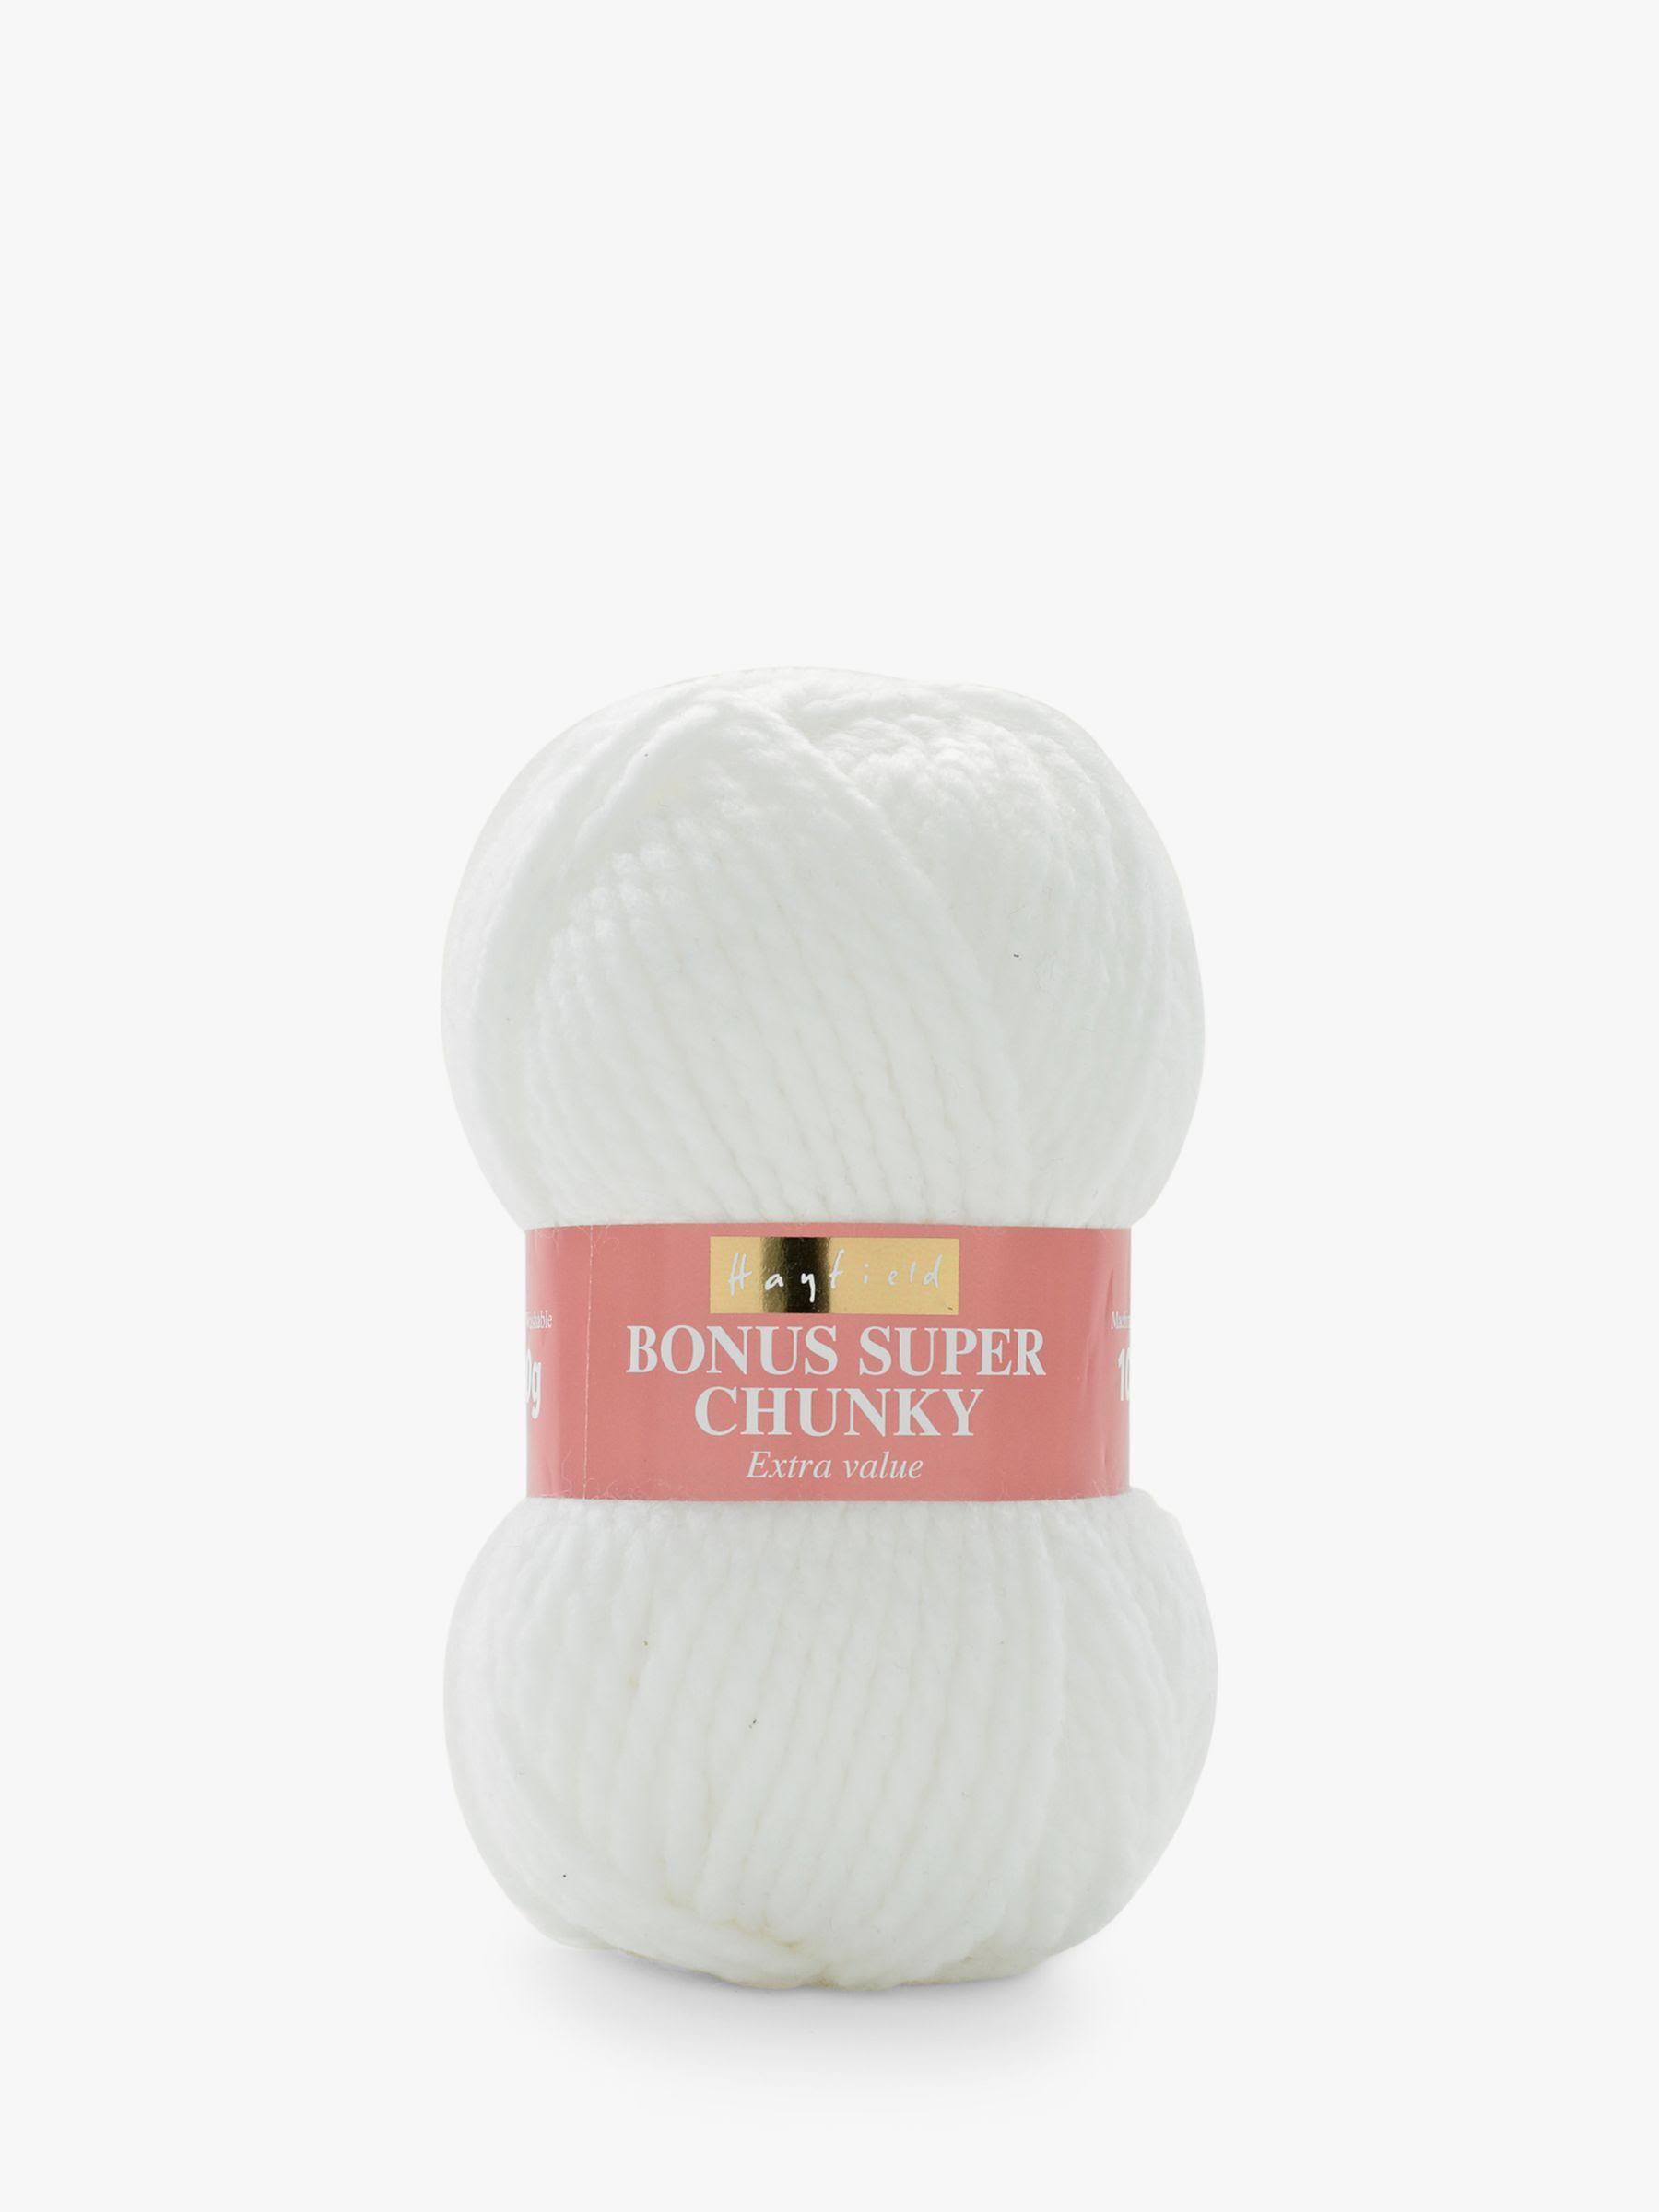 MILWARDS Crochet Hook Set: Soft-Grip Rubber Handles: Set of 6, 2.5,3,3.5,4,4.5,5 mm, Rainbow